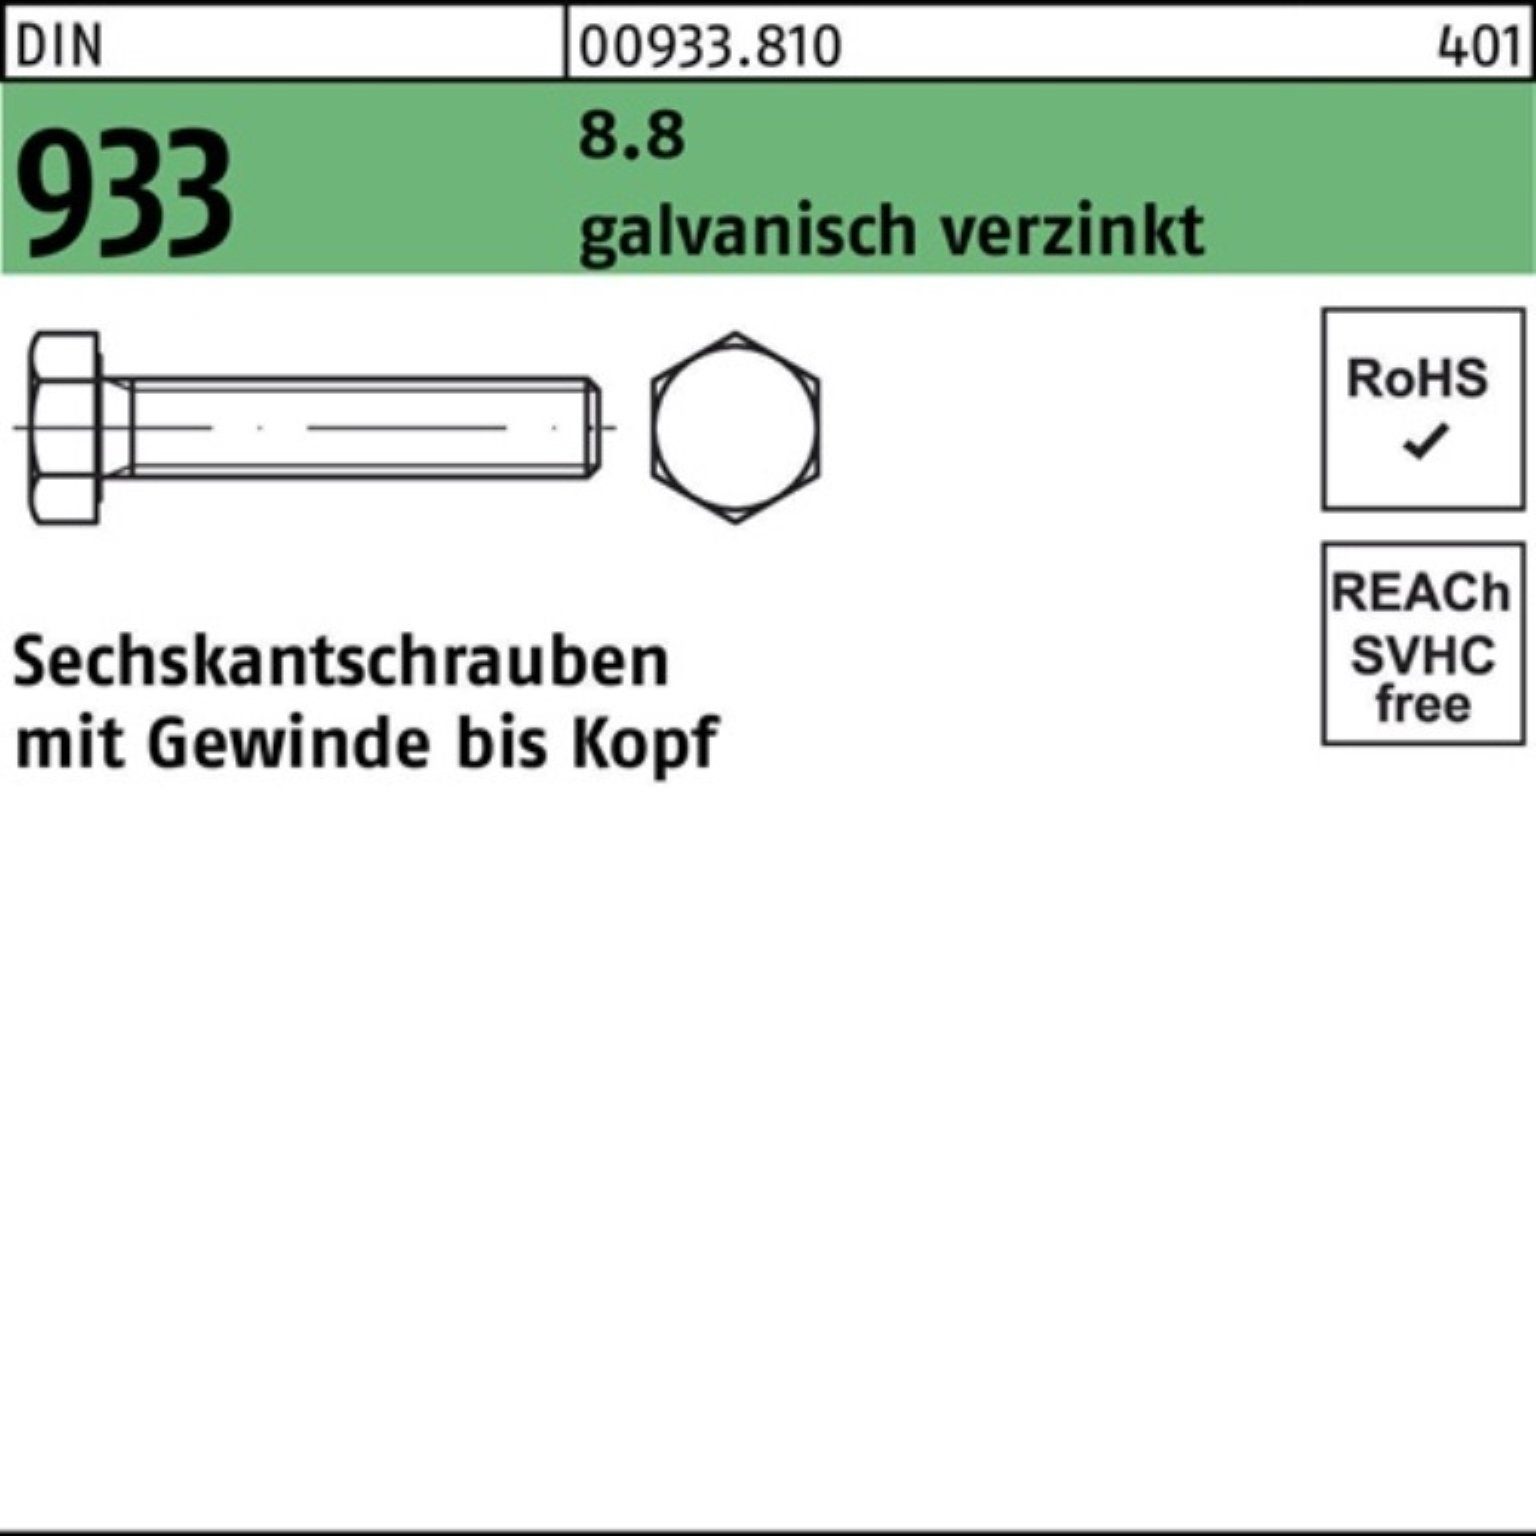 933 Sechskantschraube 1 8.8 Sechskantschraube 100er Reyher Pack galv.verz. Stü 140 DIN M27x VG